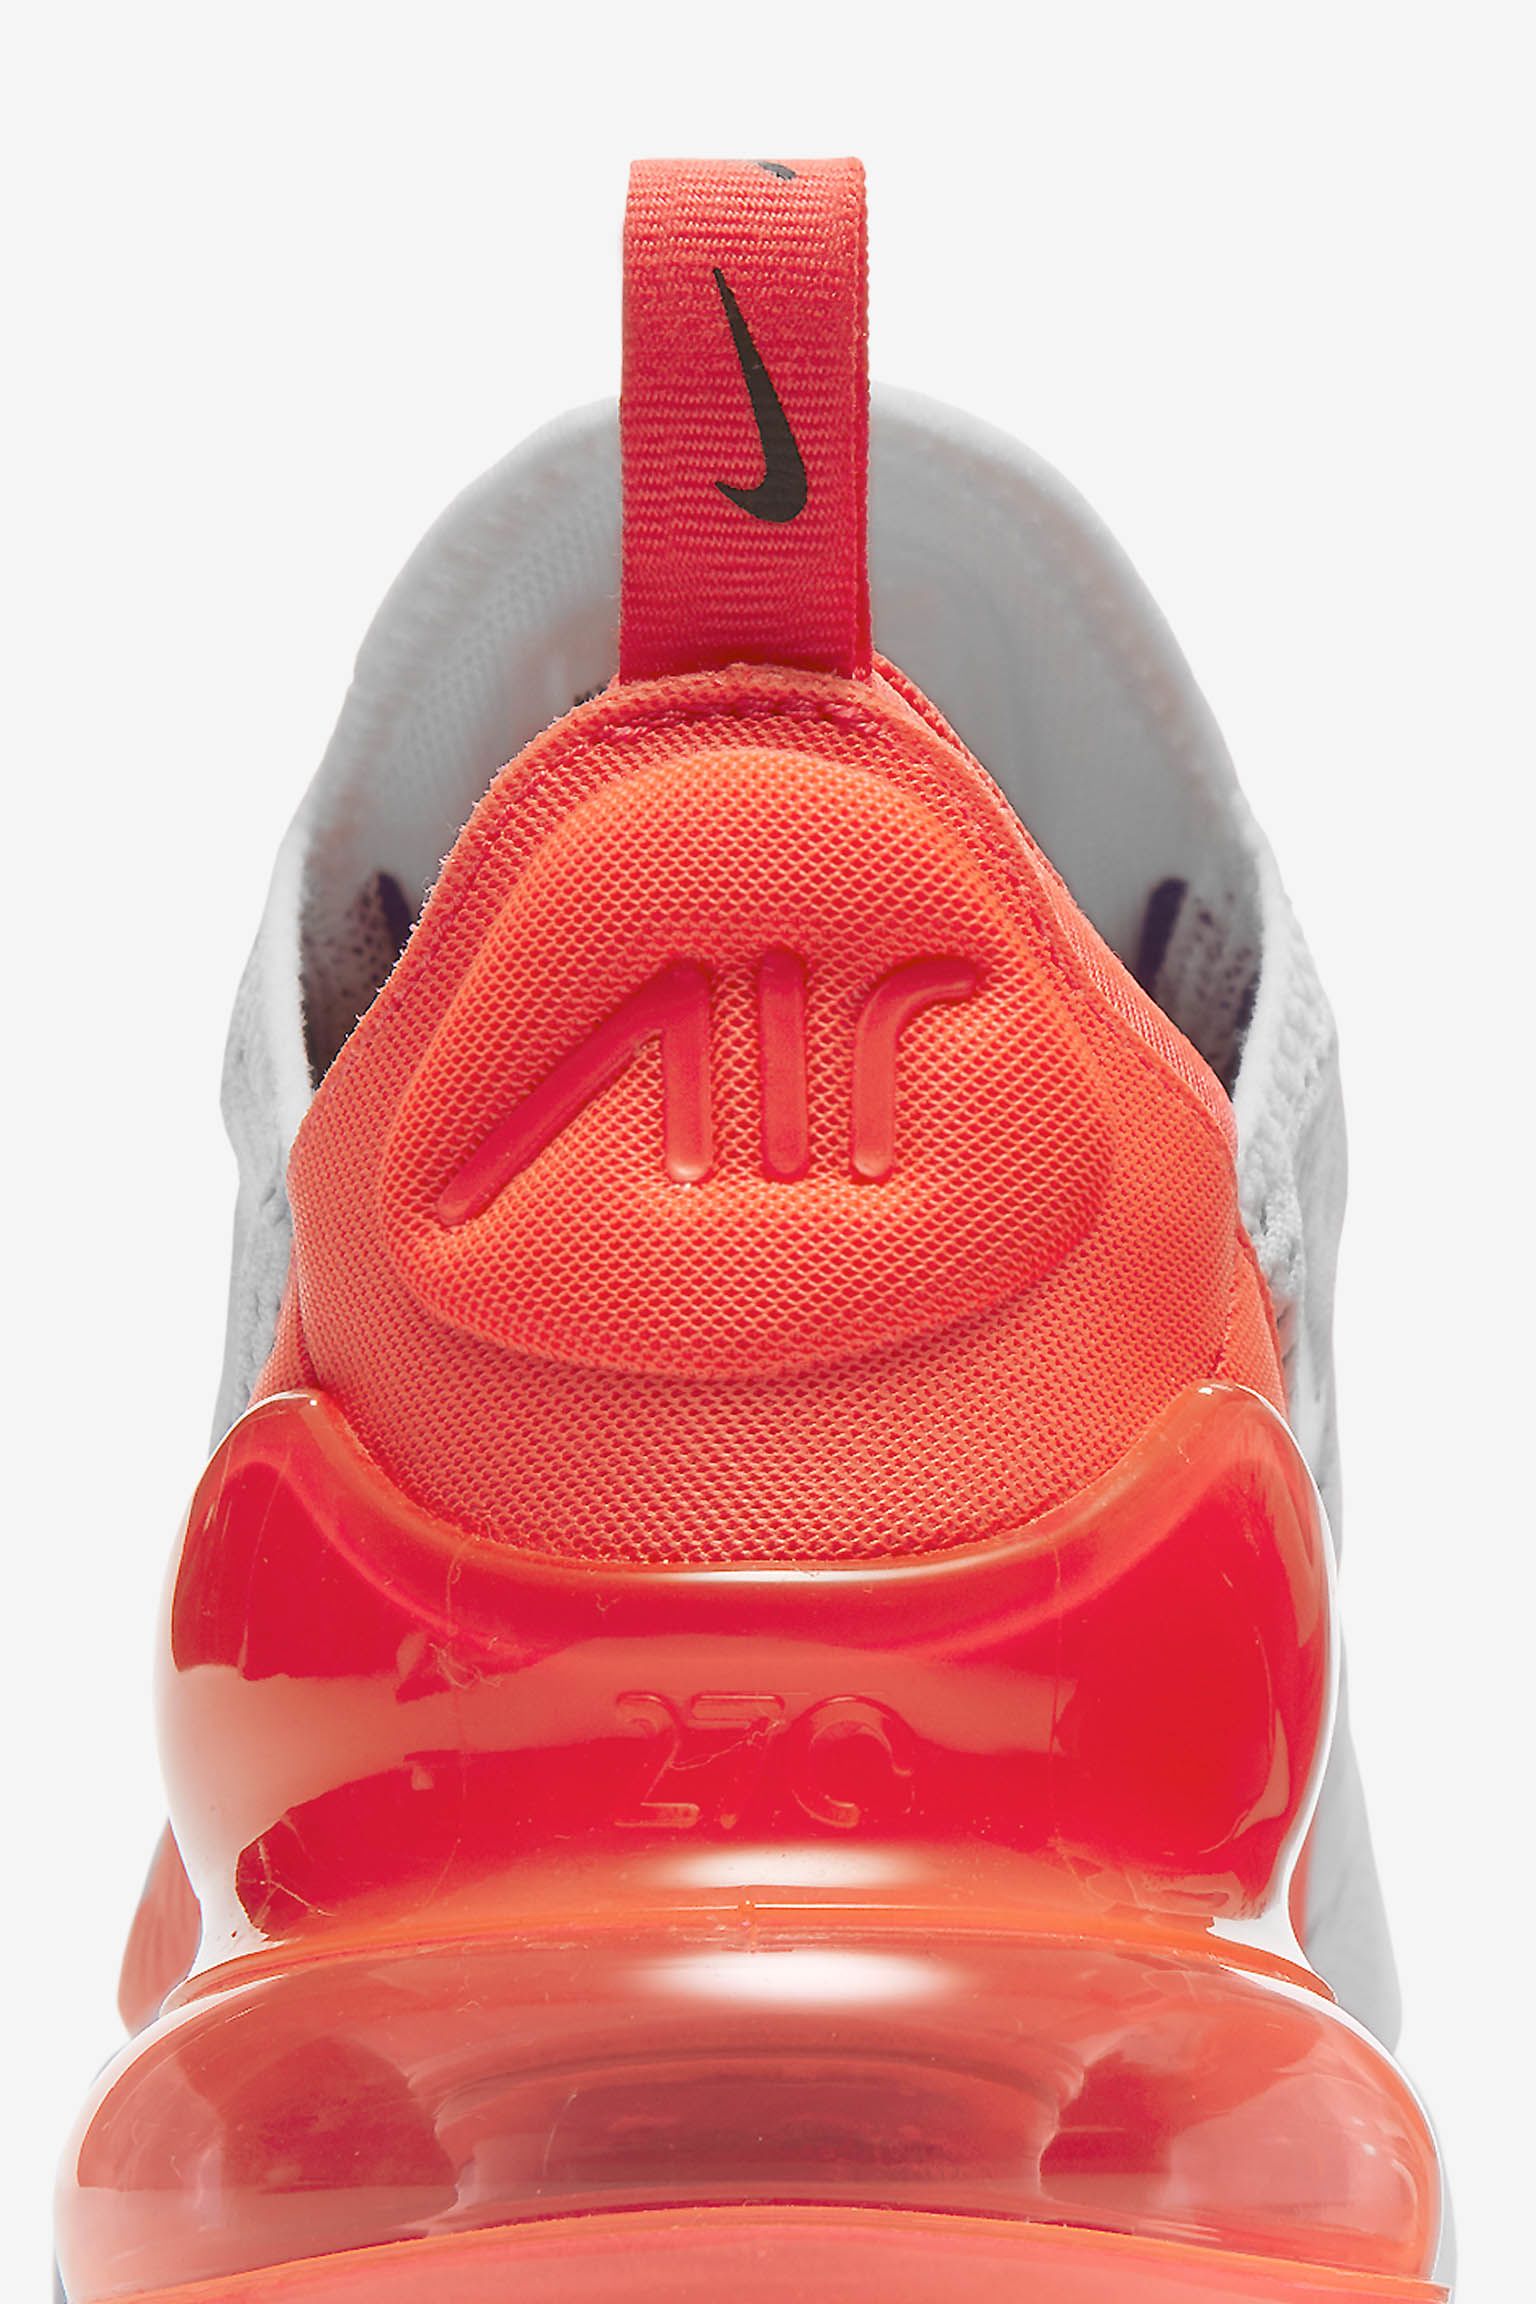 nike air max 270 ultramarine/solar red women's shoe